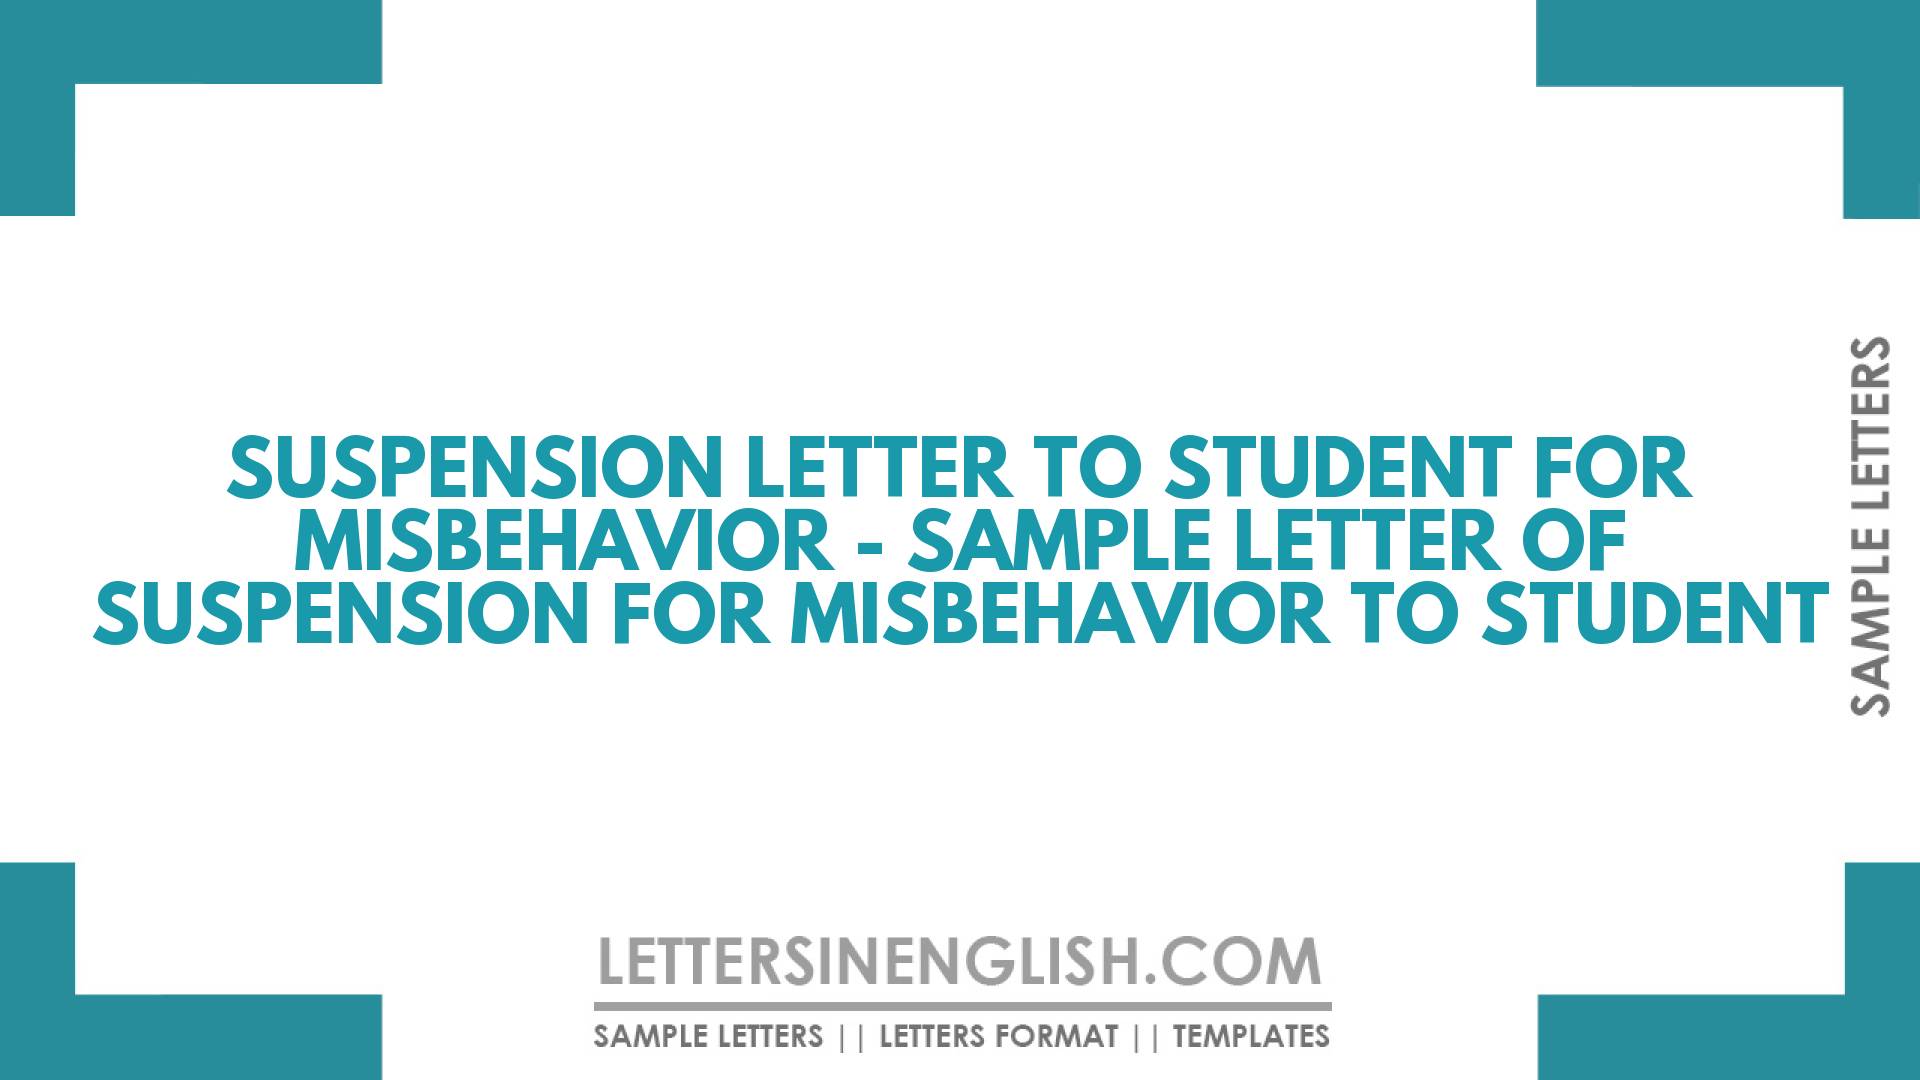 Suspension Letter to Student for Misbehavior – Sample Letter of Suspension for Misbehavior to Student